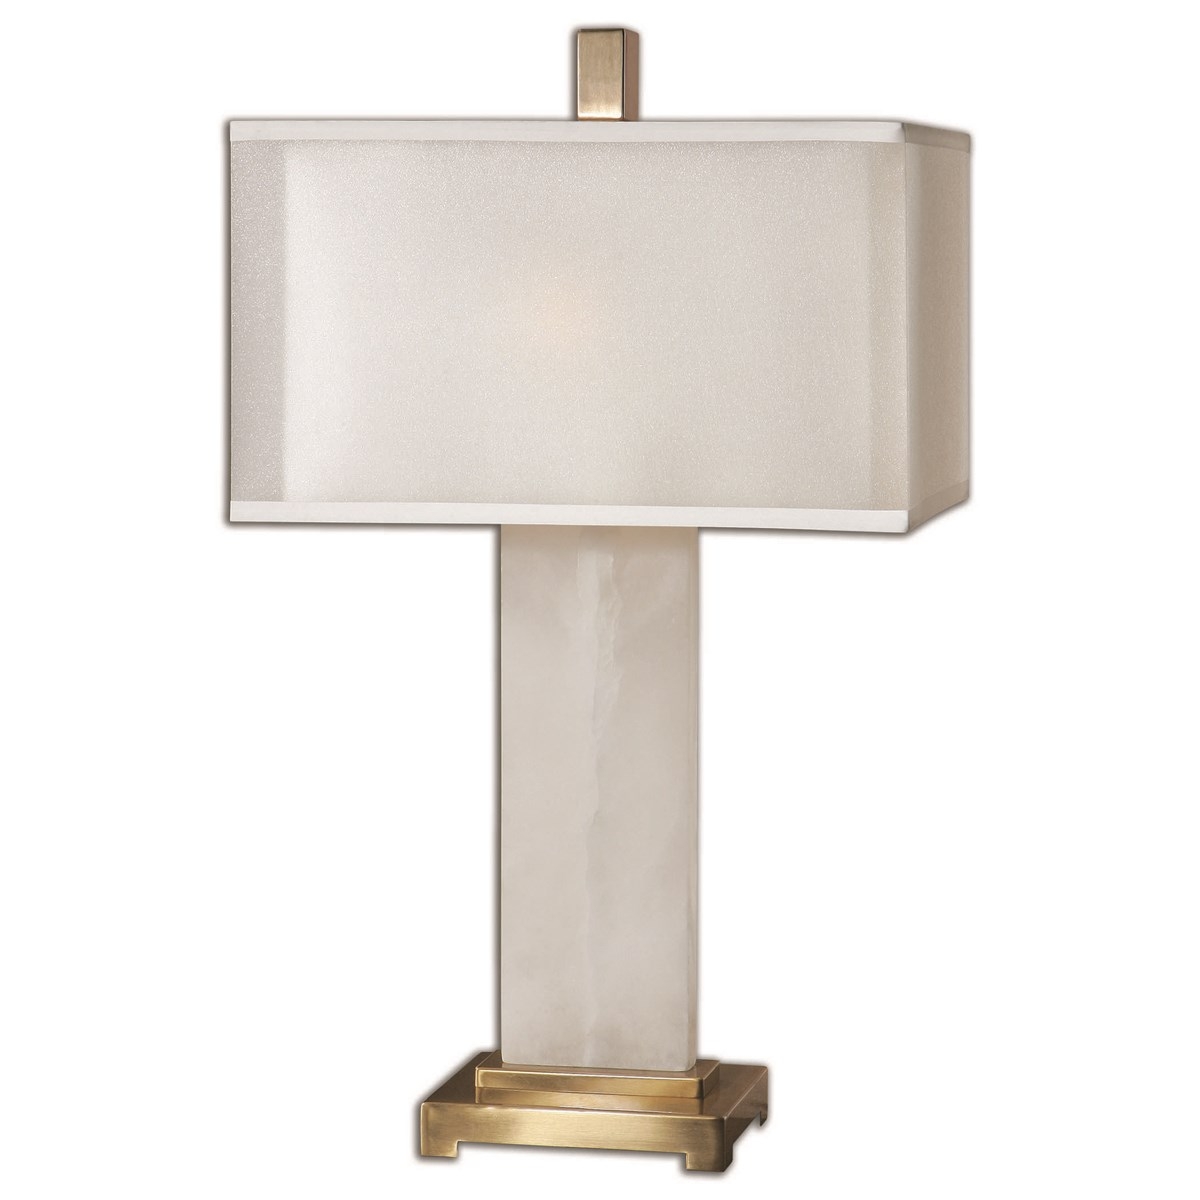 ATHANAS TABLE LAMP - Image 0